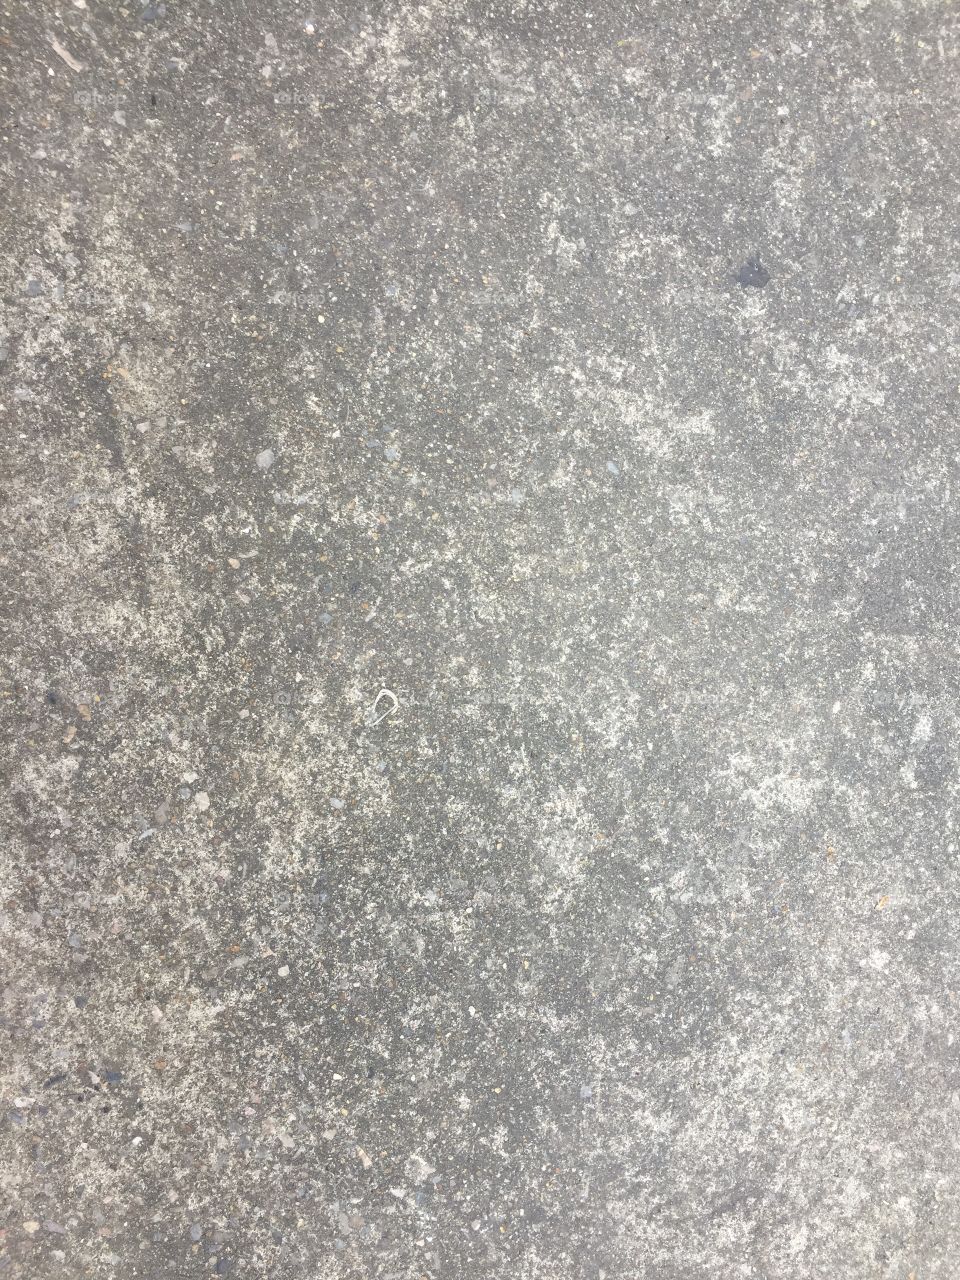 Cement texture background.